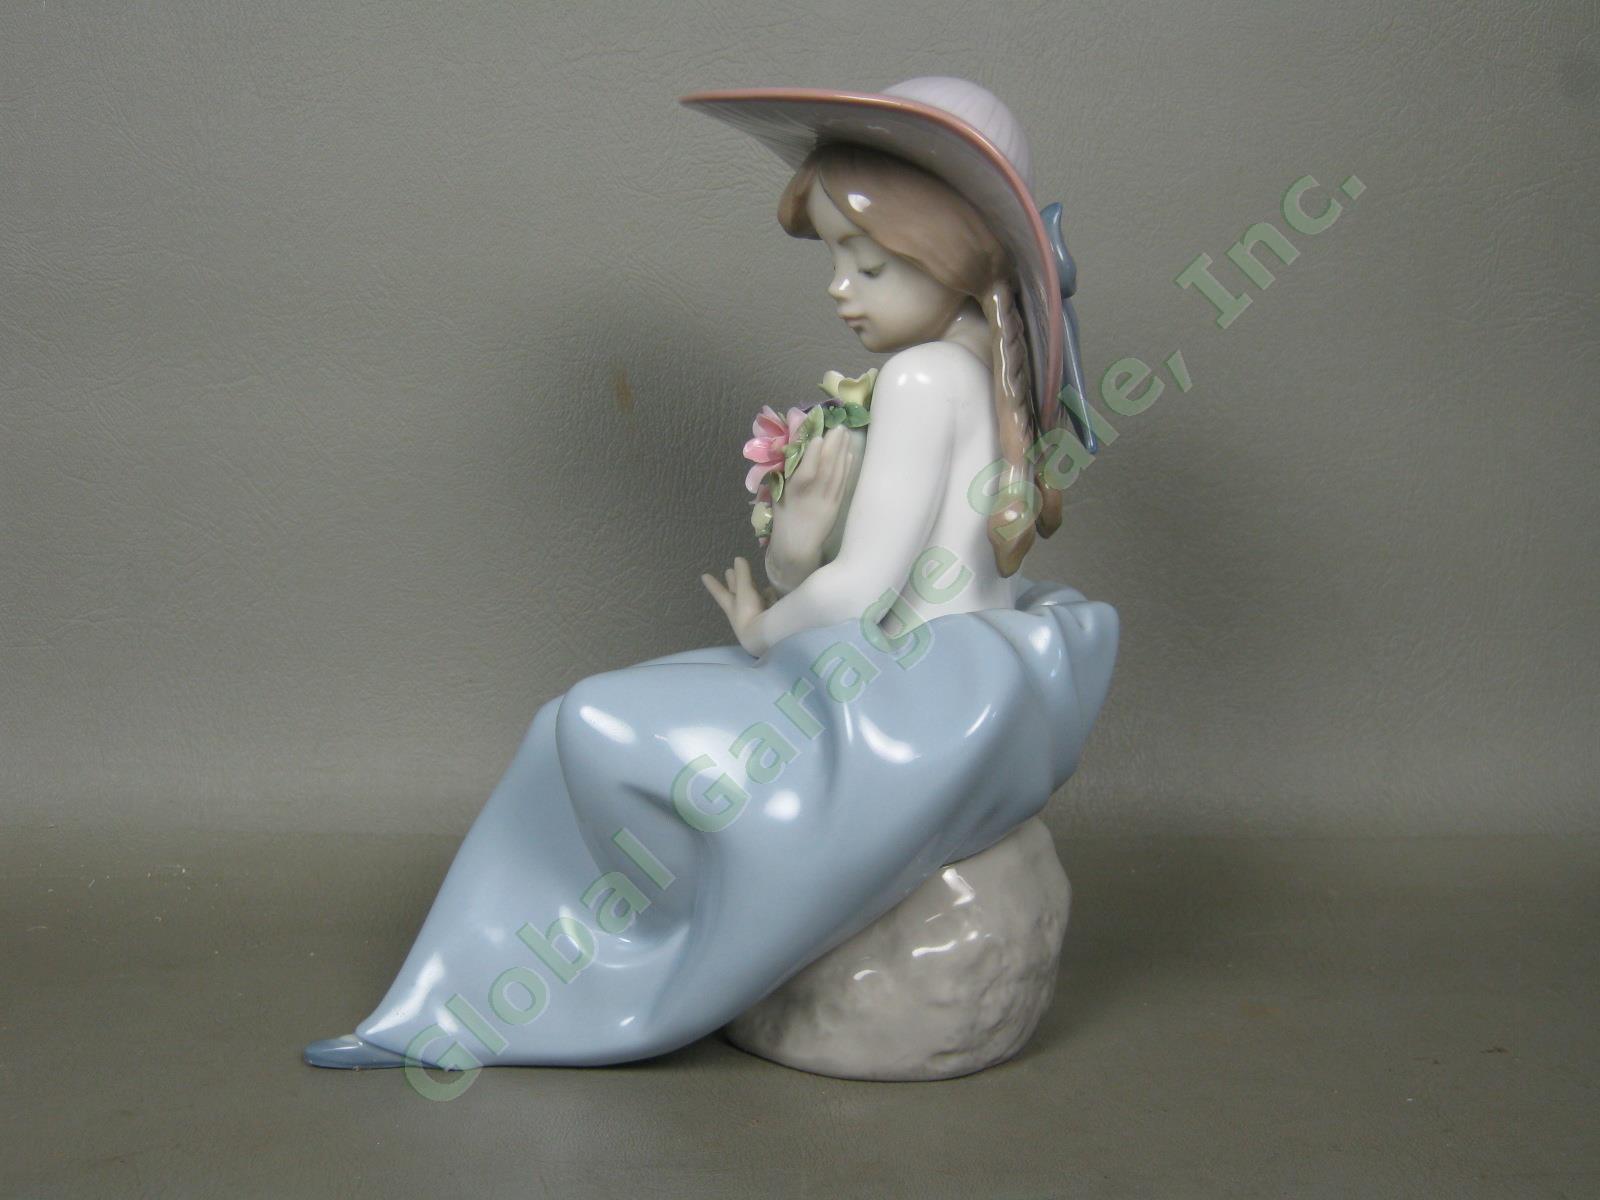 Vtg 1990 Lladro Figurine Fragrant Bouquet #5862 Girl w/ Flowers Mint In Box! NR! 4